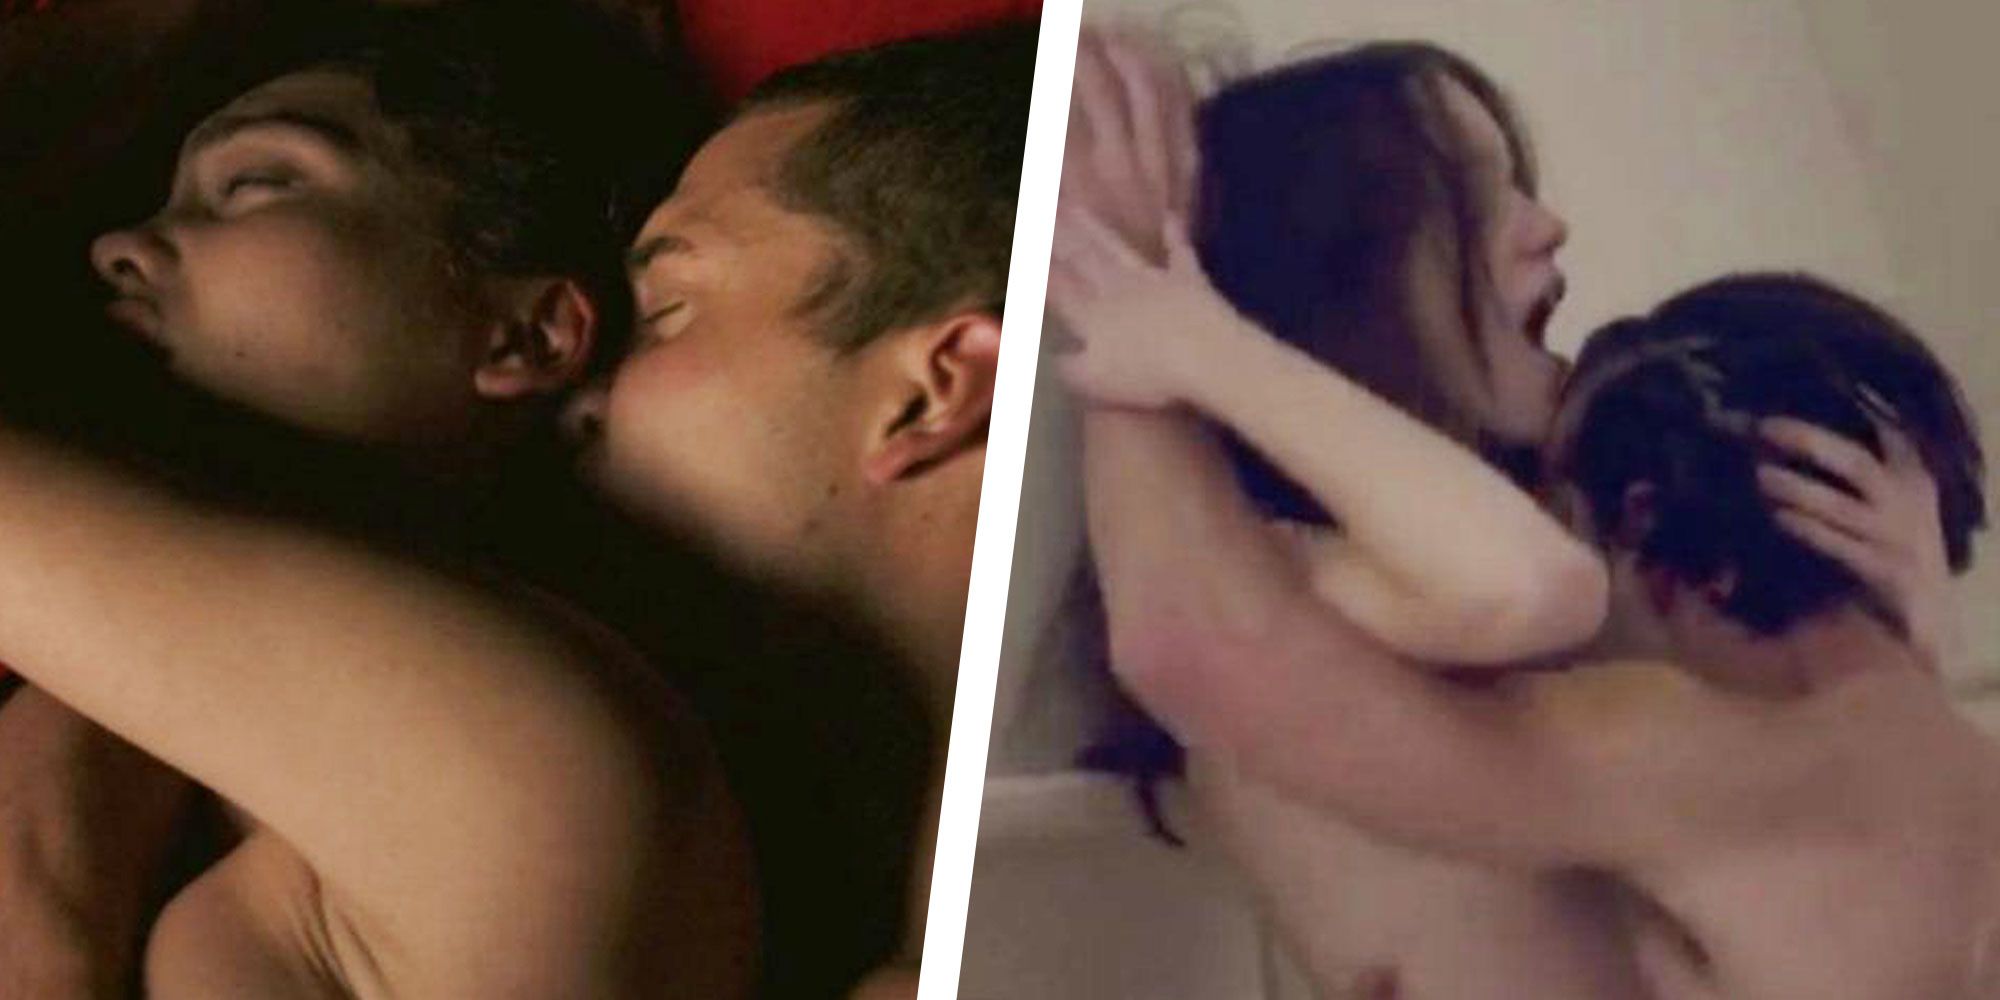 Mainstream movies unsimulated sex scenes